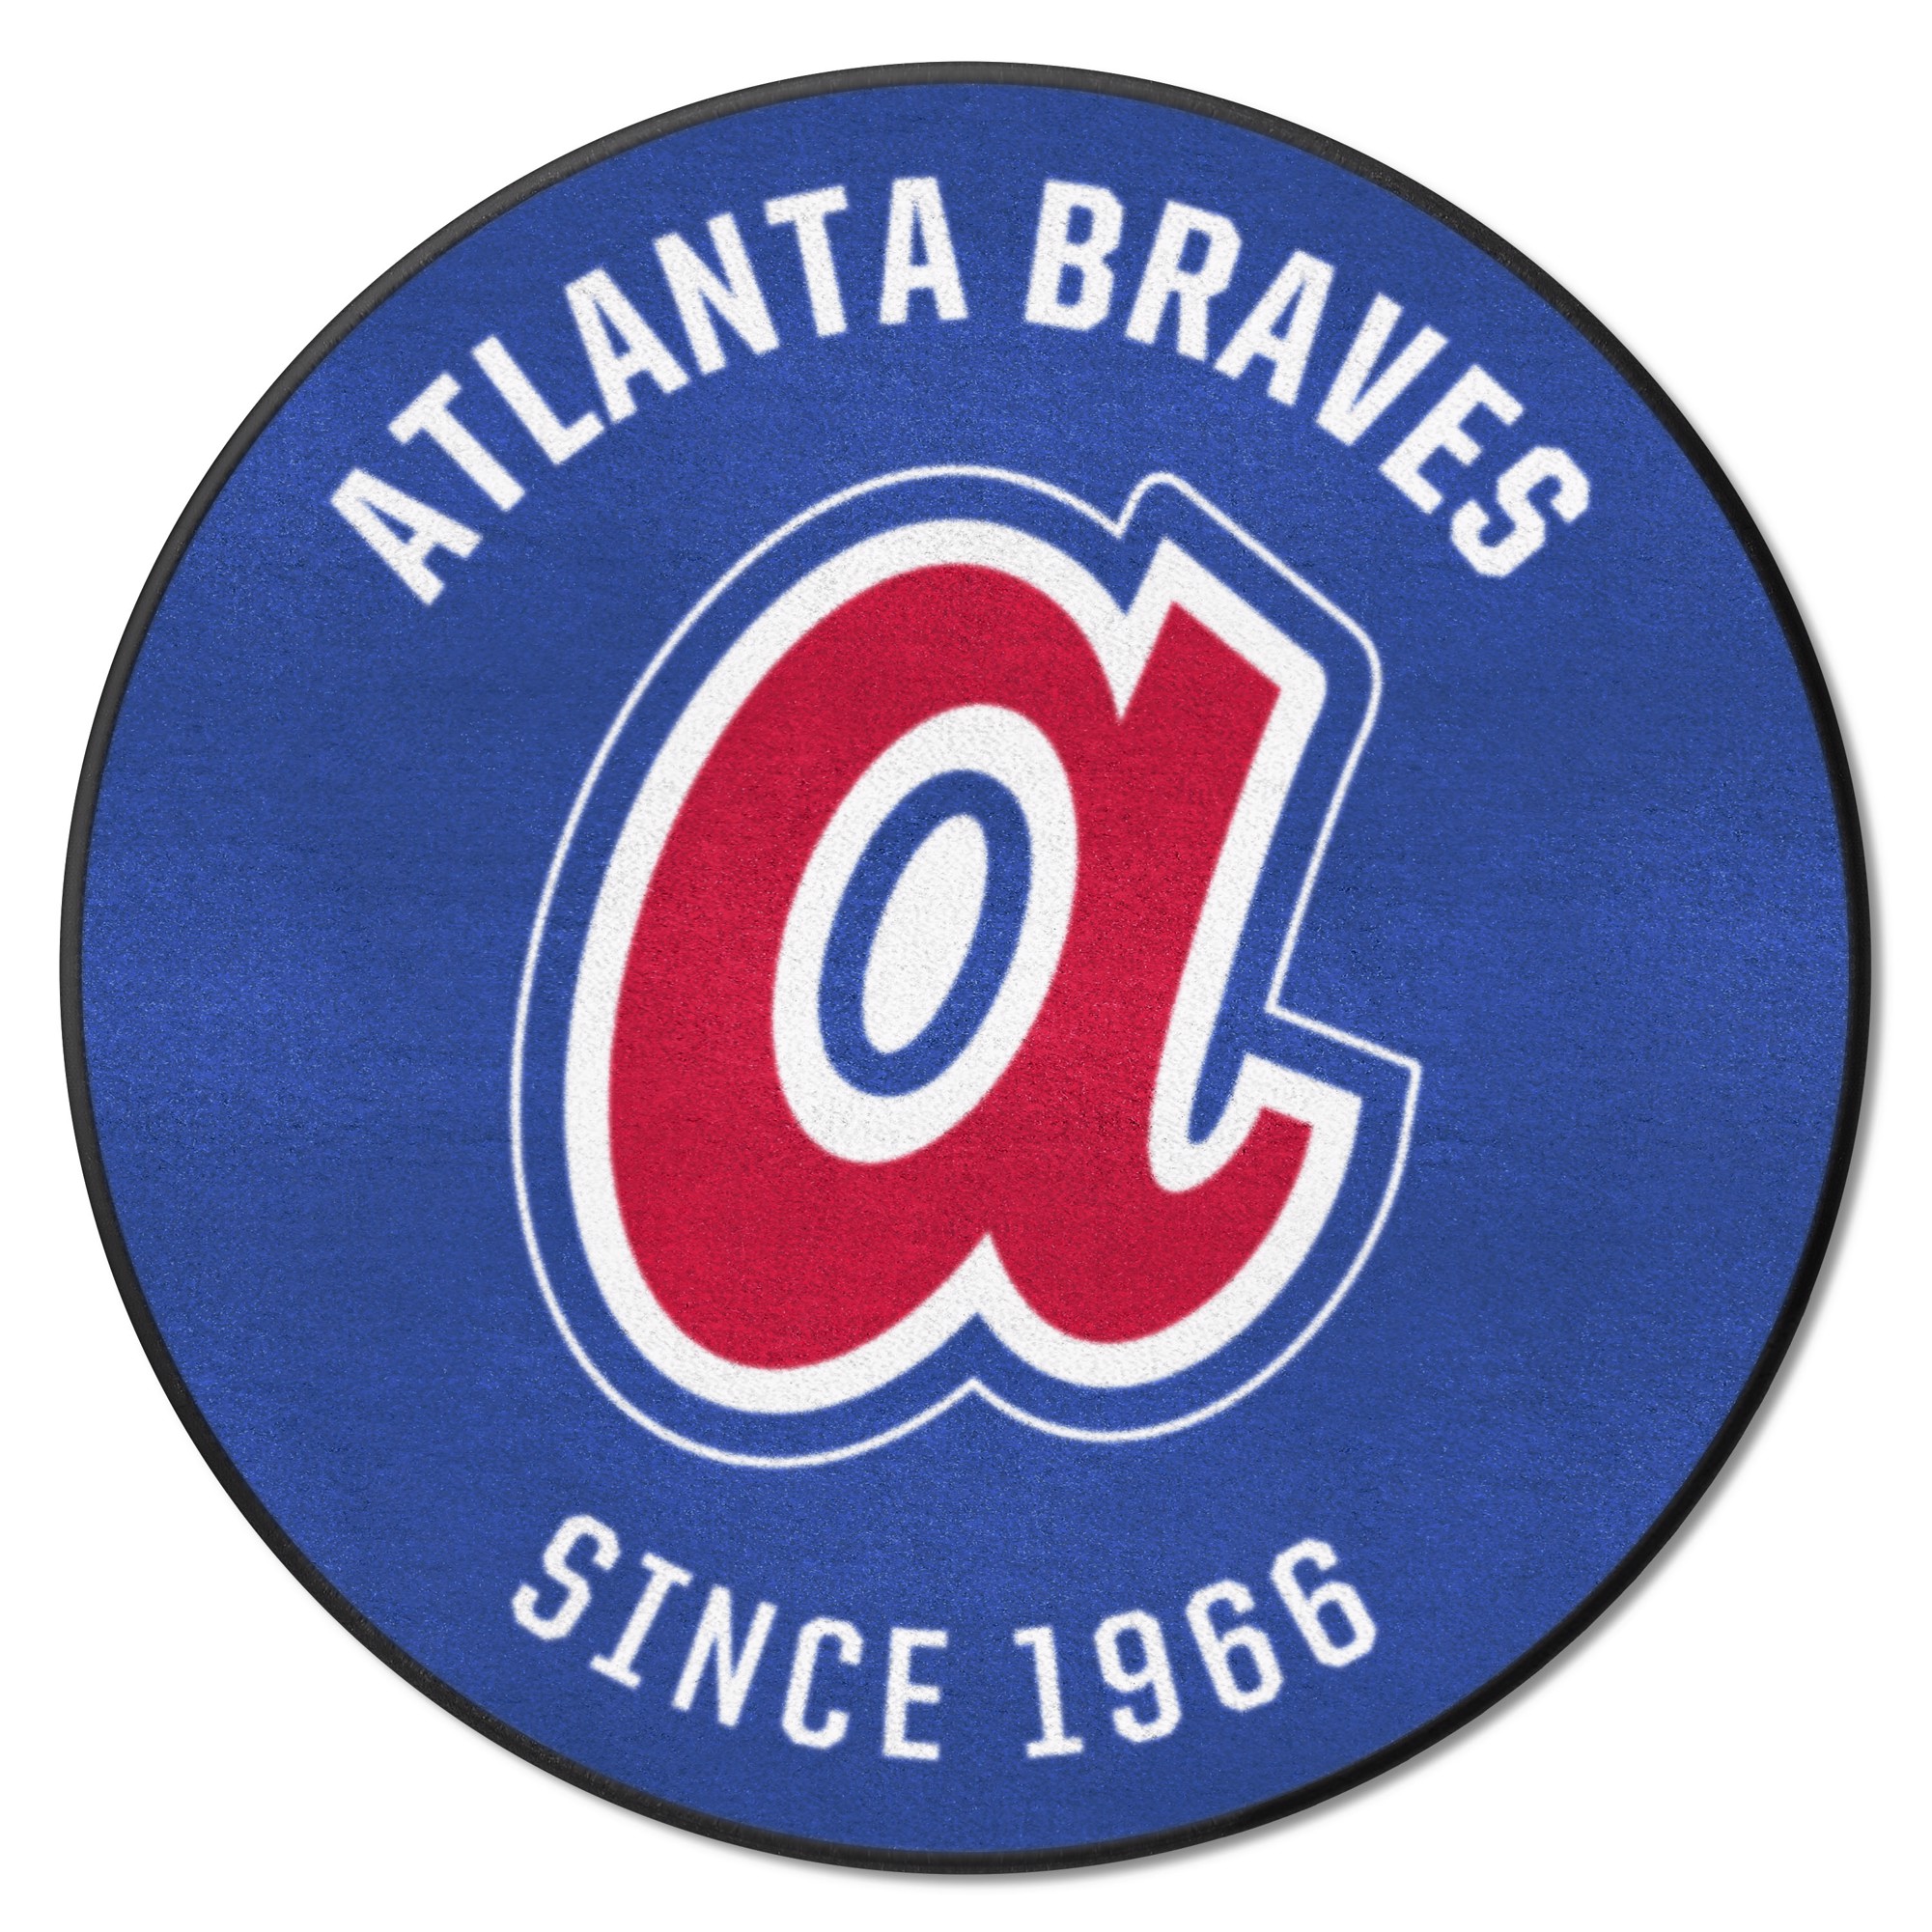 MLB - Atlanta Braves Roundel Mat